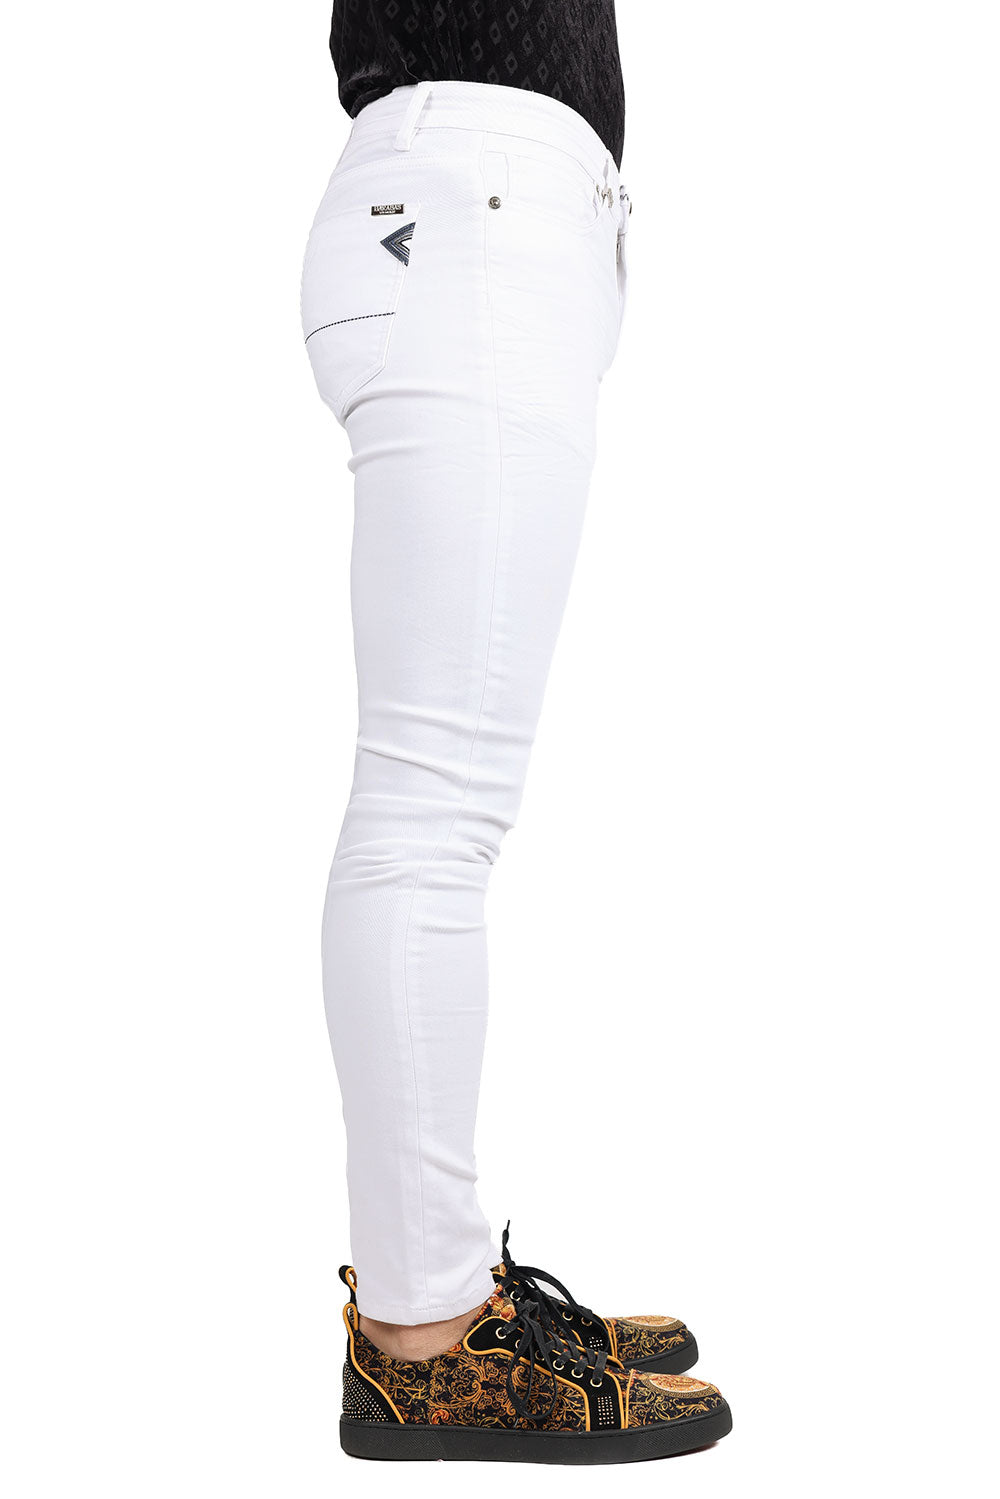 Barabas Men's Skinny Fit Classic Denim Solid Color Jeans 1700 White